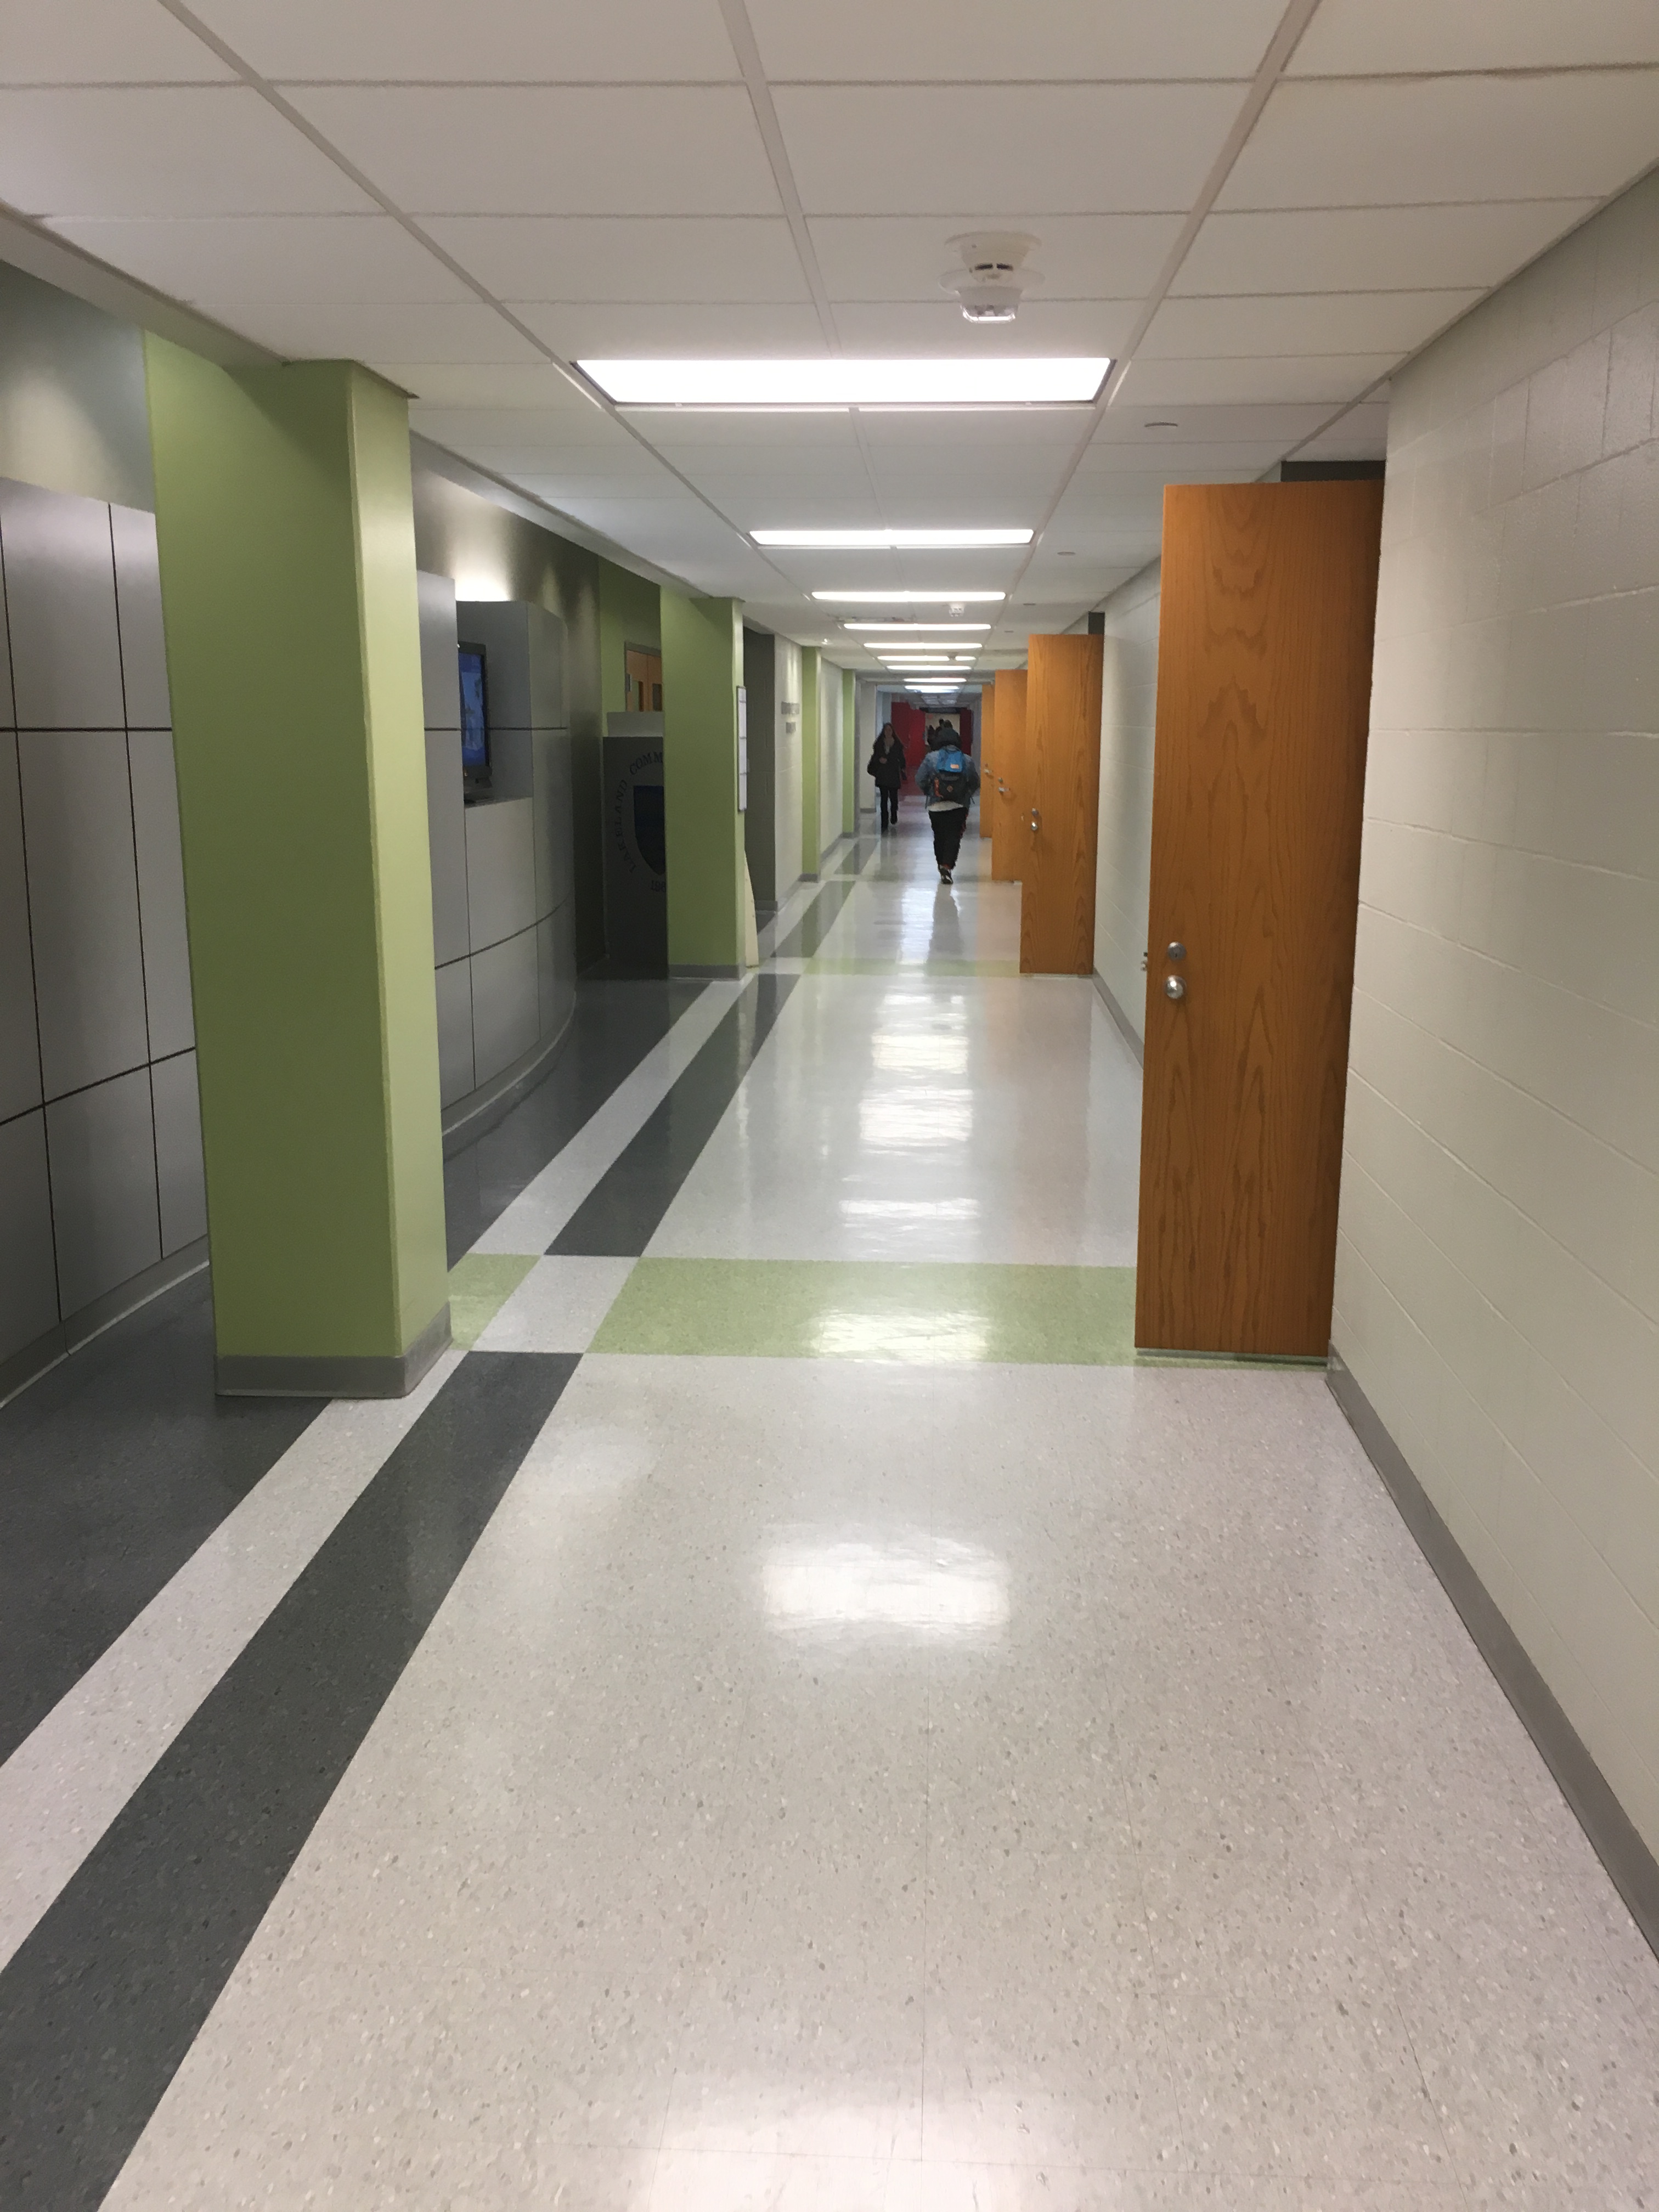 Hallway at LCC